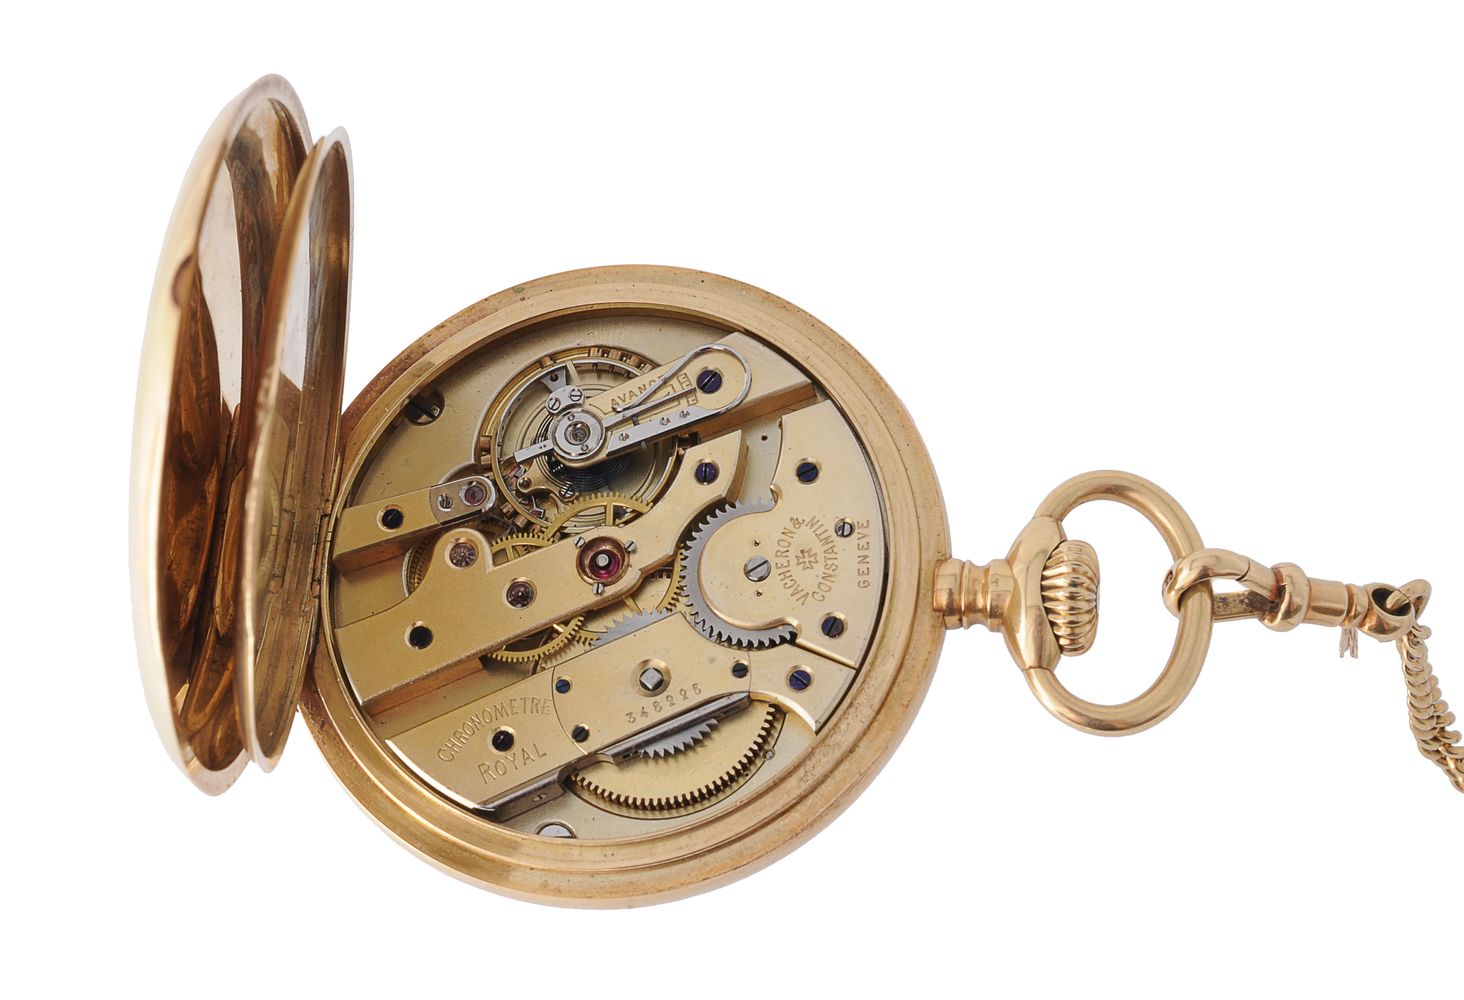 Vacheron & Constantin, Chronometre Royal, 18 carat gold keyless wind open face pocket watch - Image 3 of 3